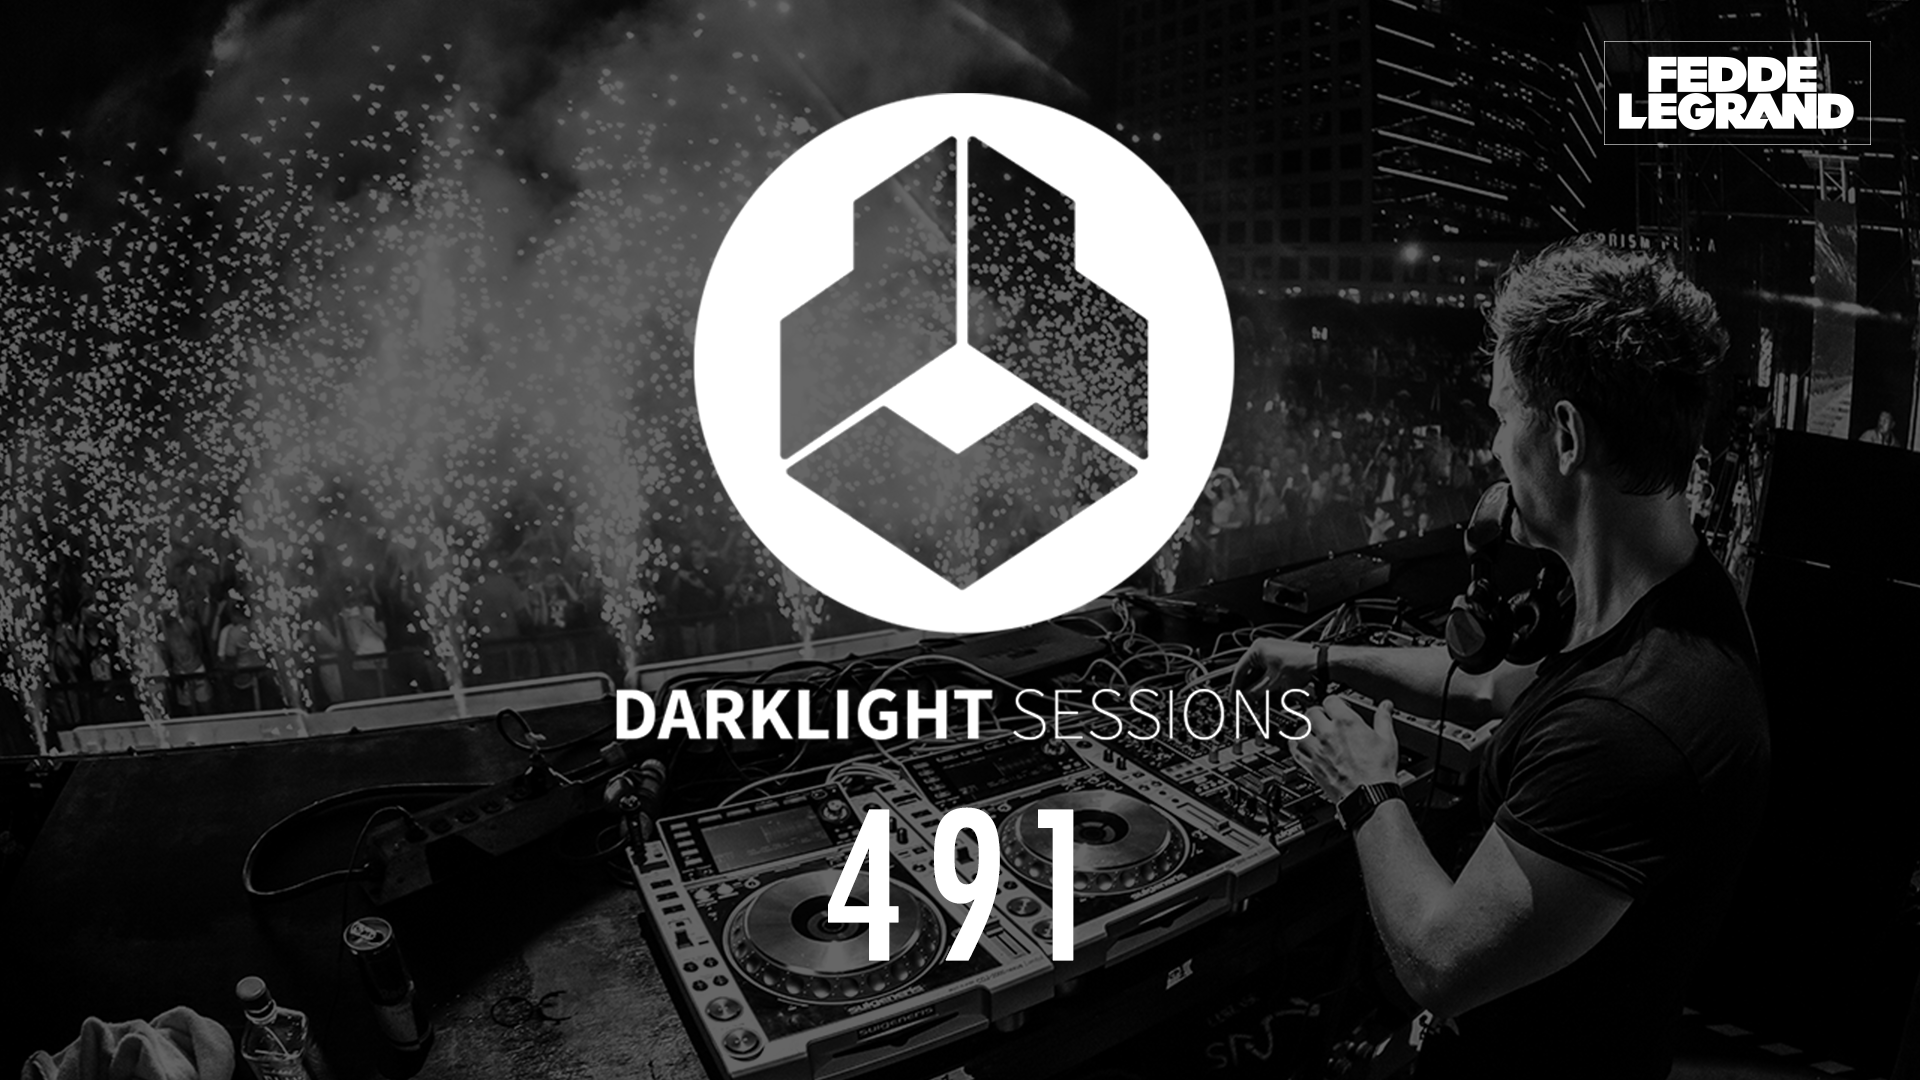 Darklight Sessions 491